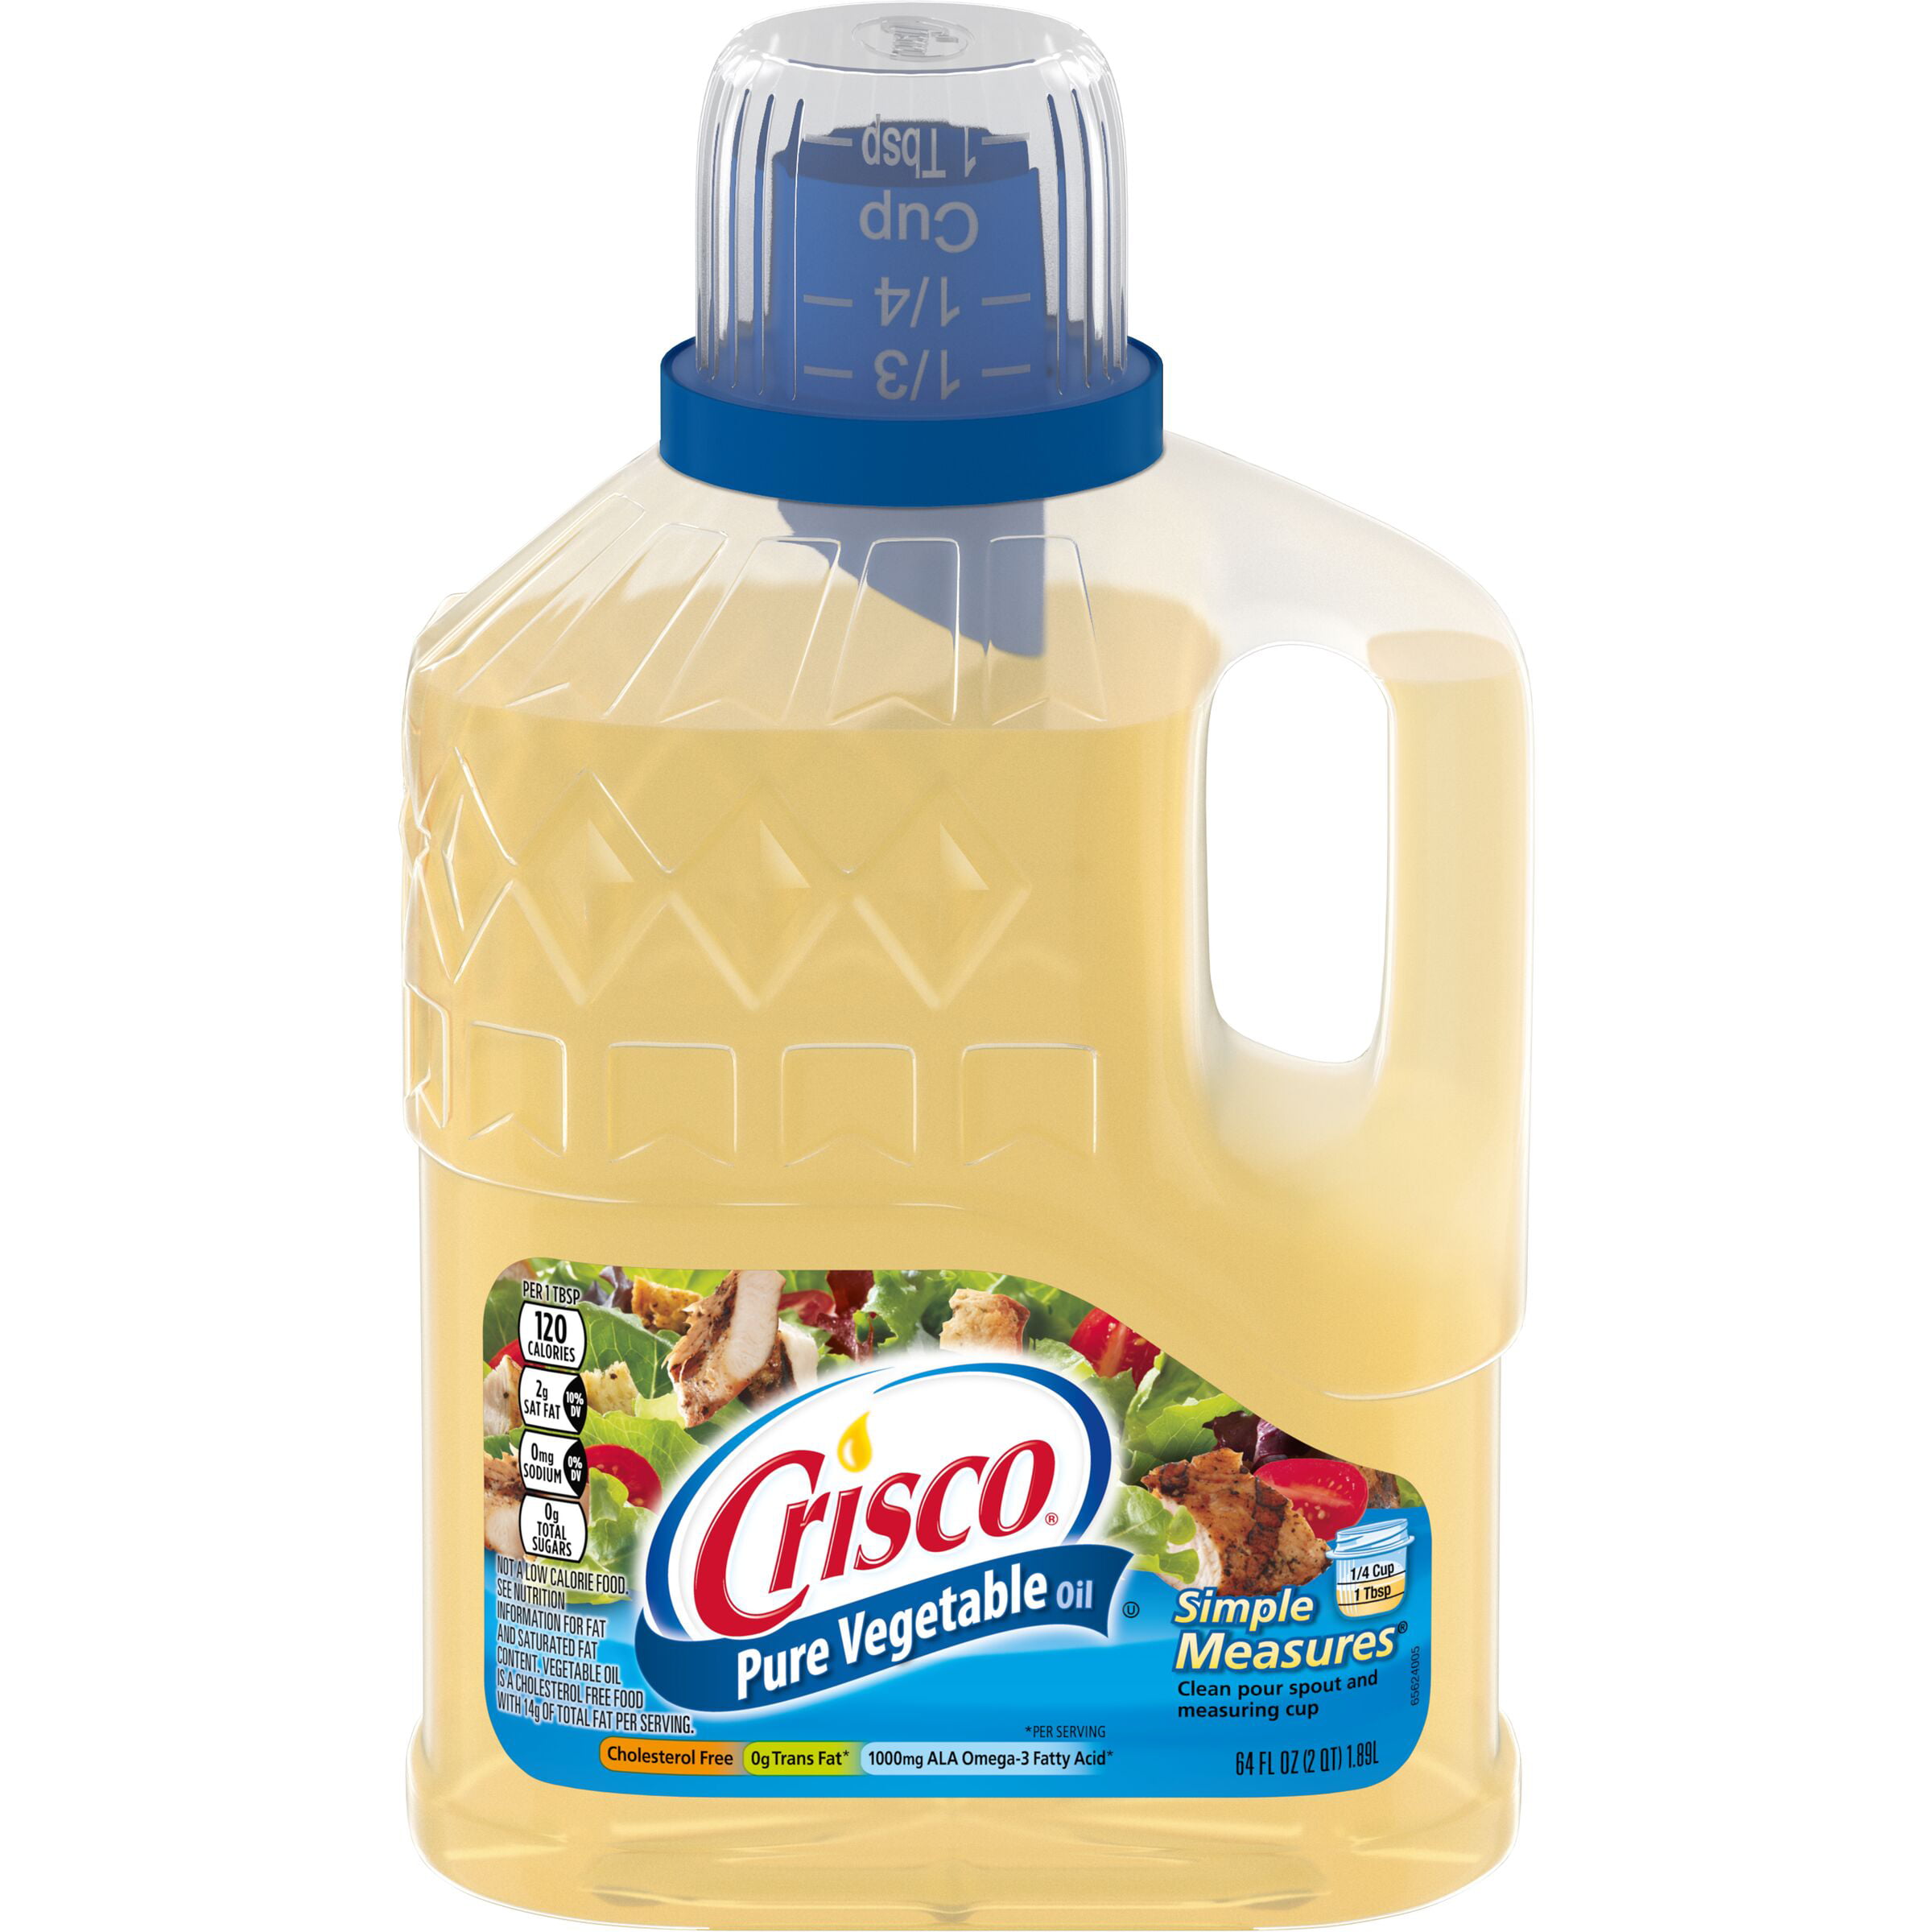 Crisco Pure Vegetable Oil, 64-Fluid Ounce - Walmart.com - Walmart.com